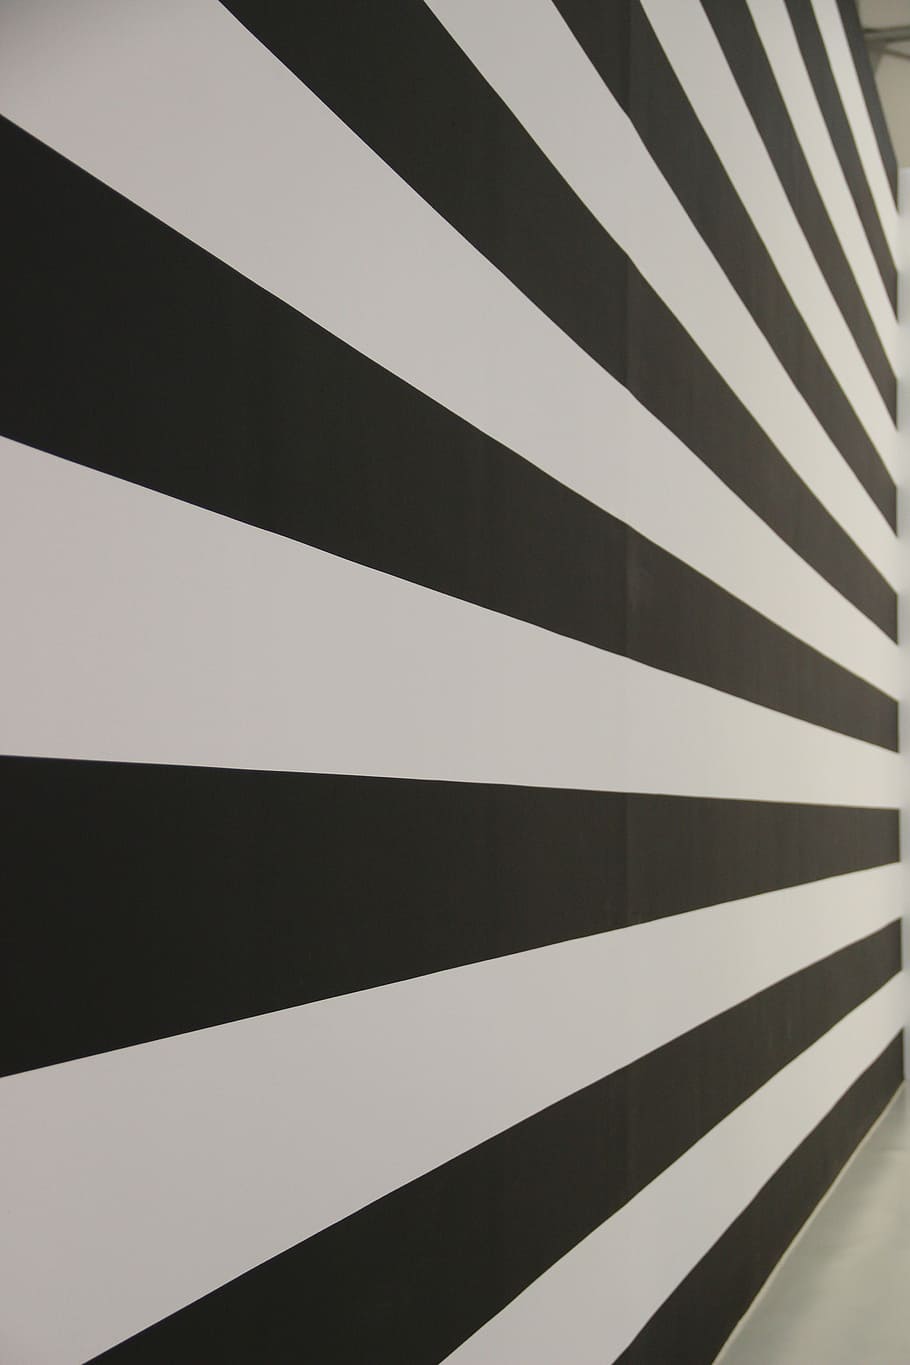 Rayas, negro, blanco, papel pintado, arte, rayas de cebra, blanco y negro, moderno, rayado, patrón